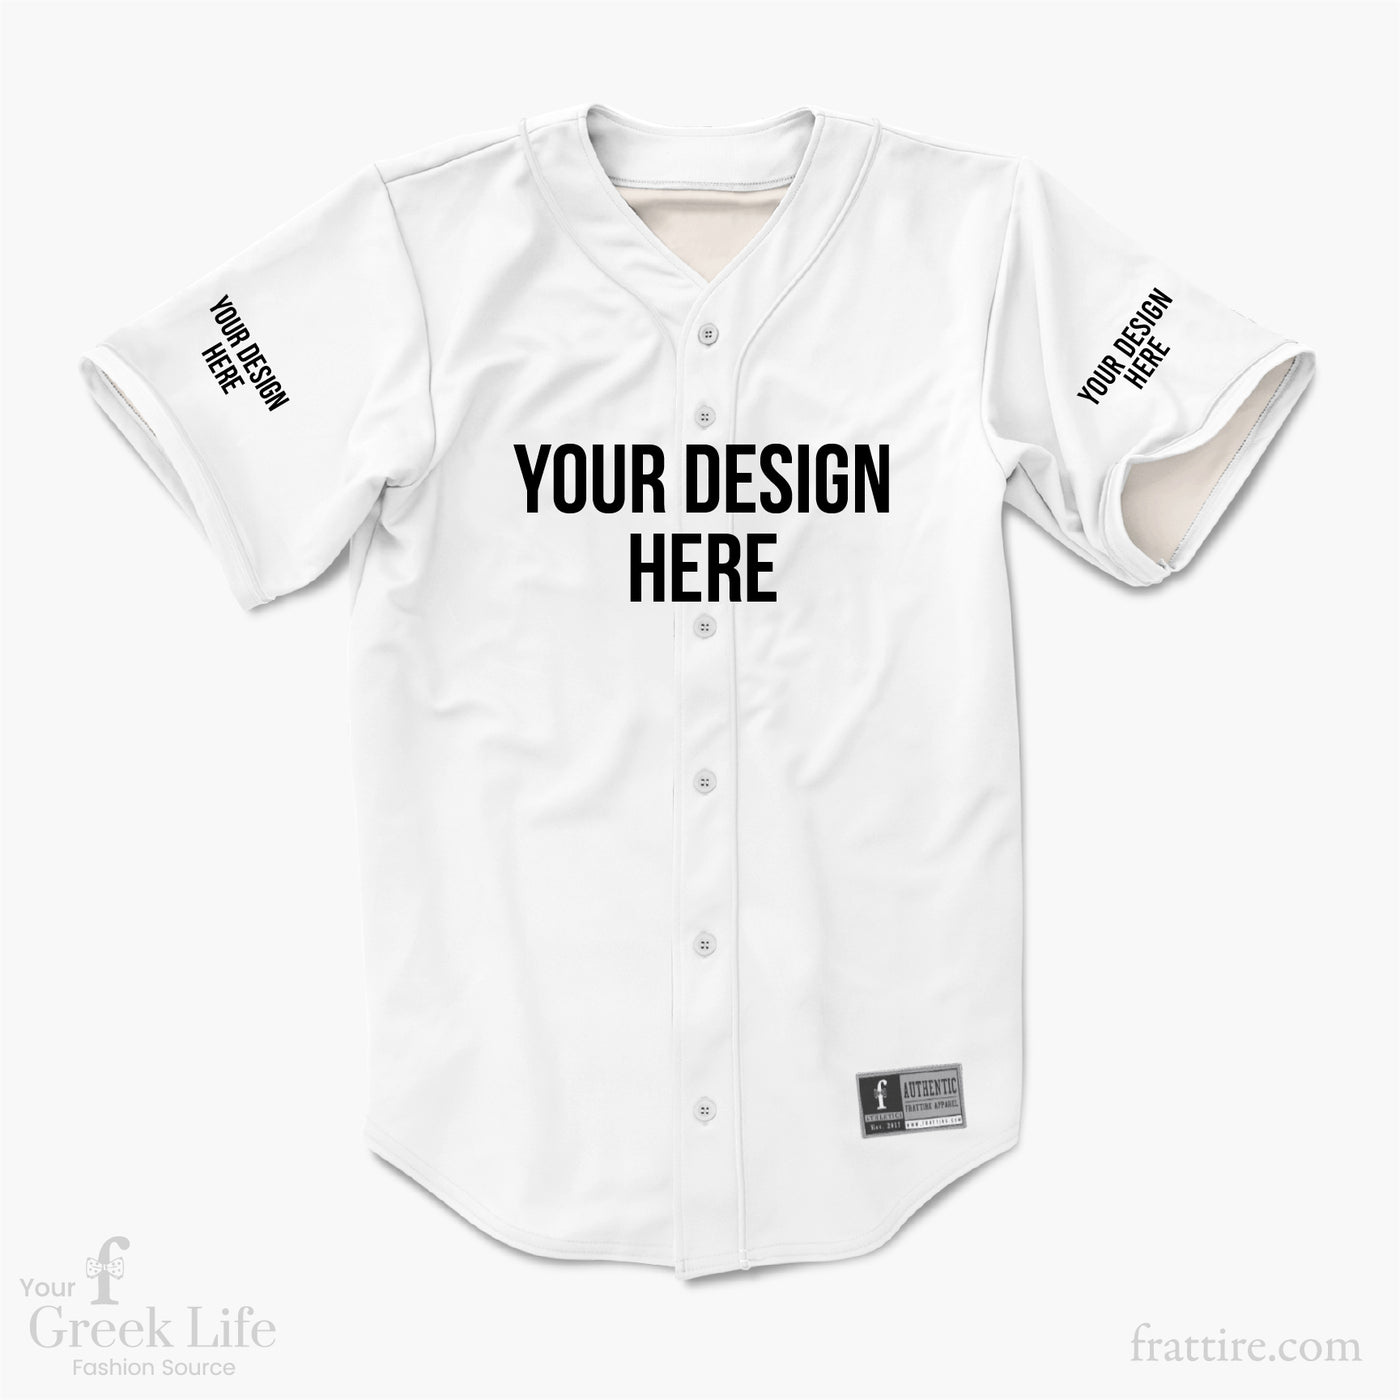 Detroit Tiger MLB Stitch Baseball Jersey Shirt Design 7 Custom Number And  Name Gift For Men And Women Fans - Freedomdesign